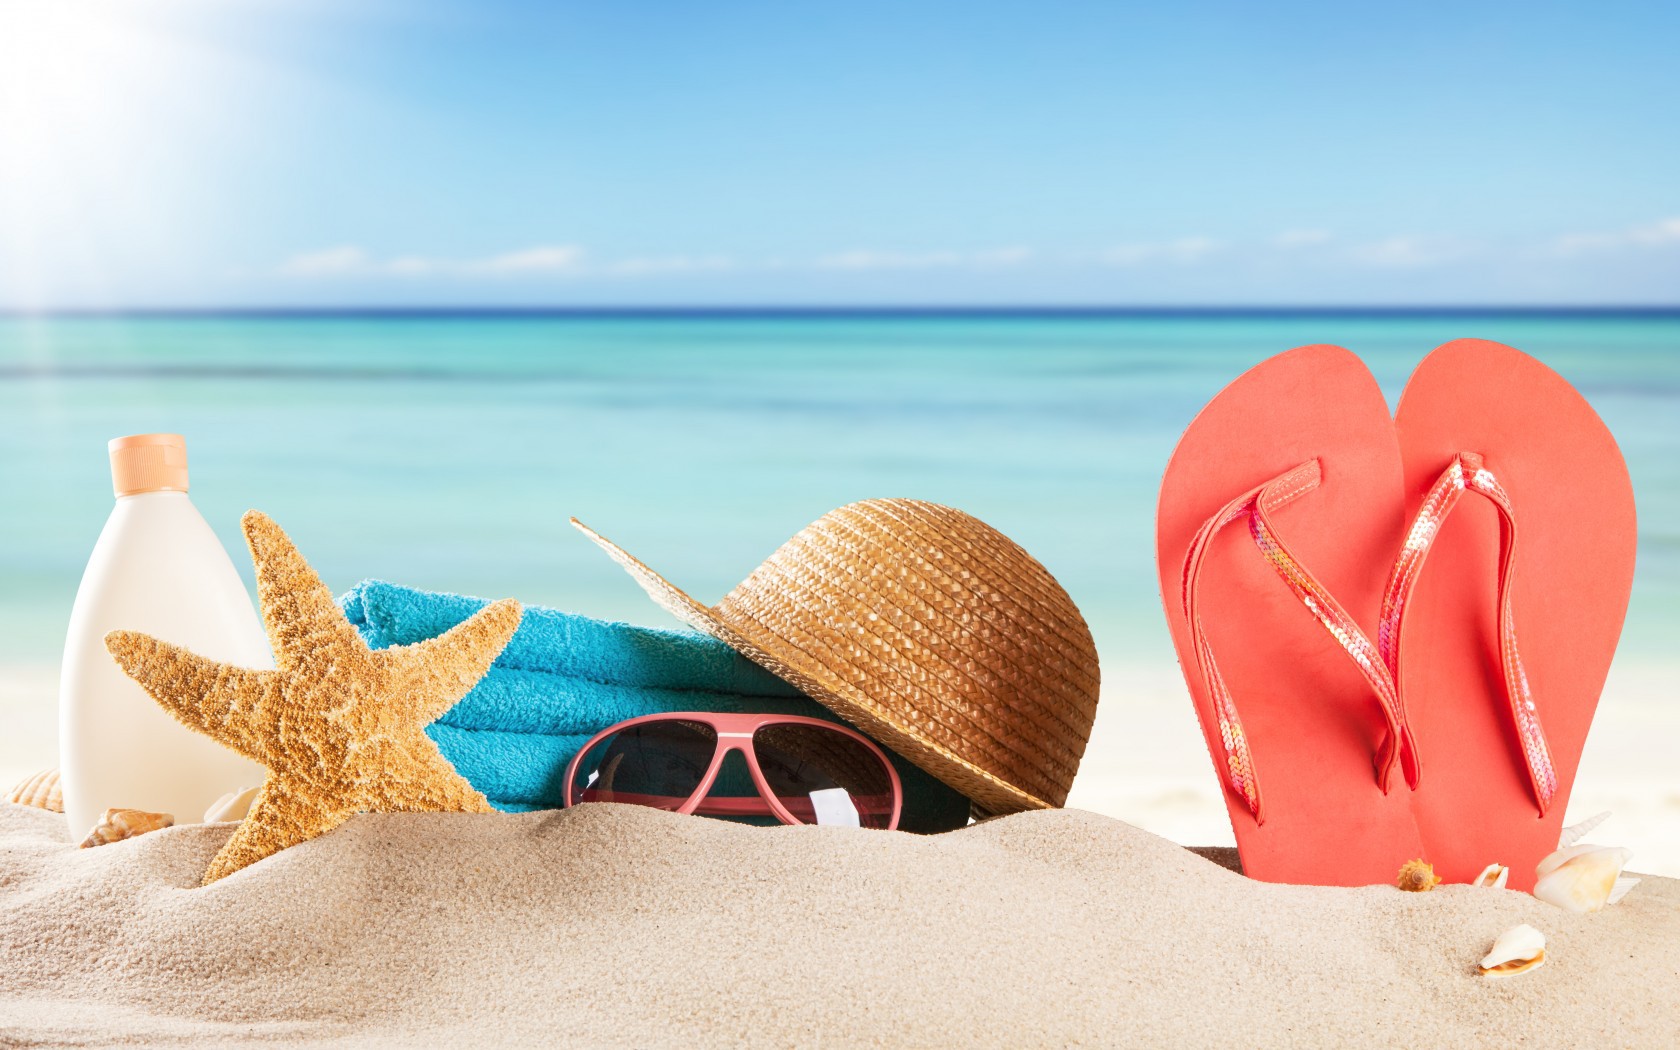 wallpaper accessories,vacation,summer,turquoise,flip flops,beach